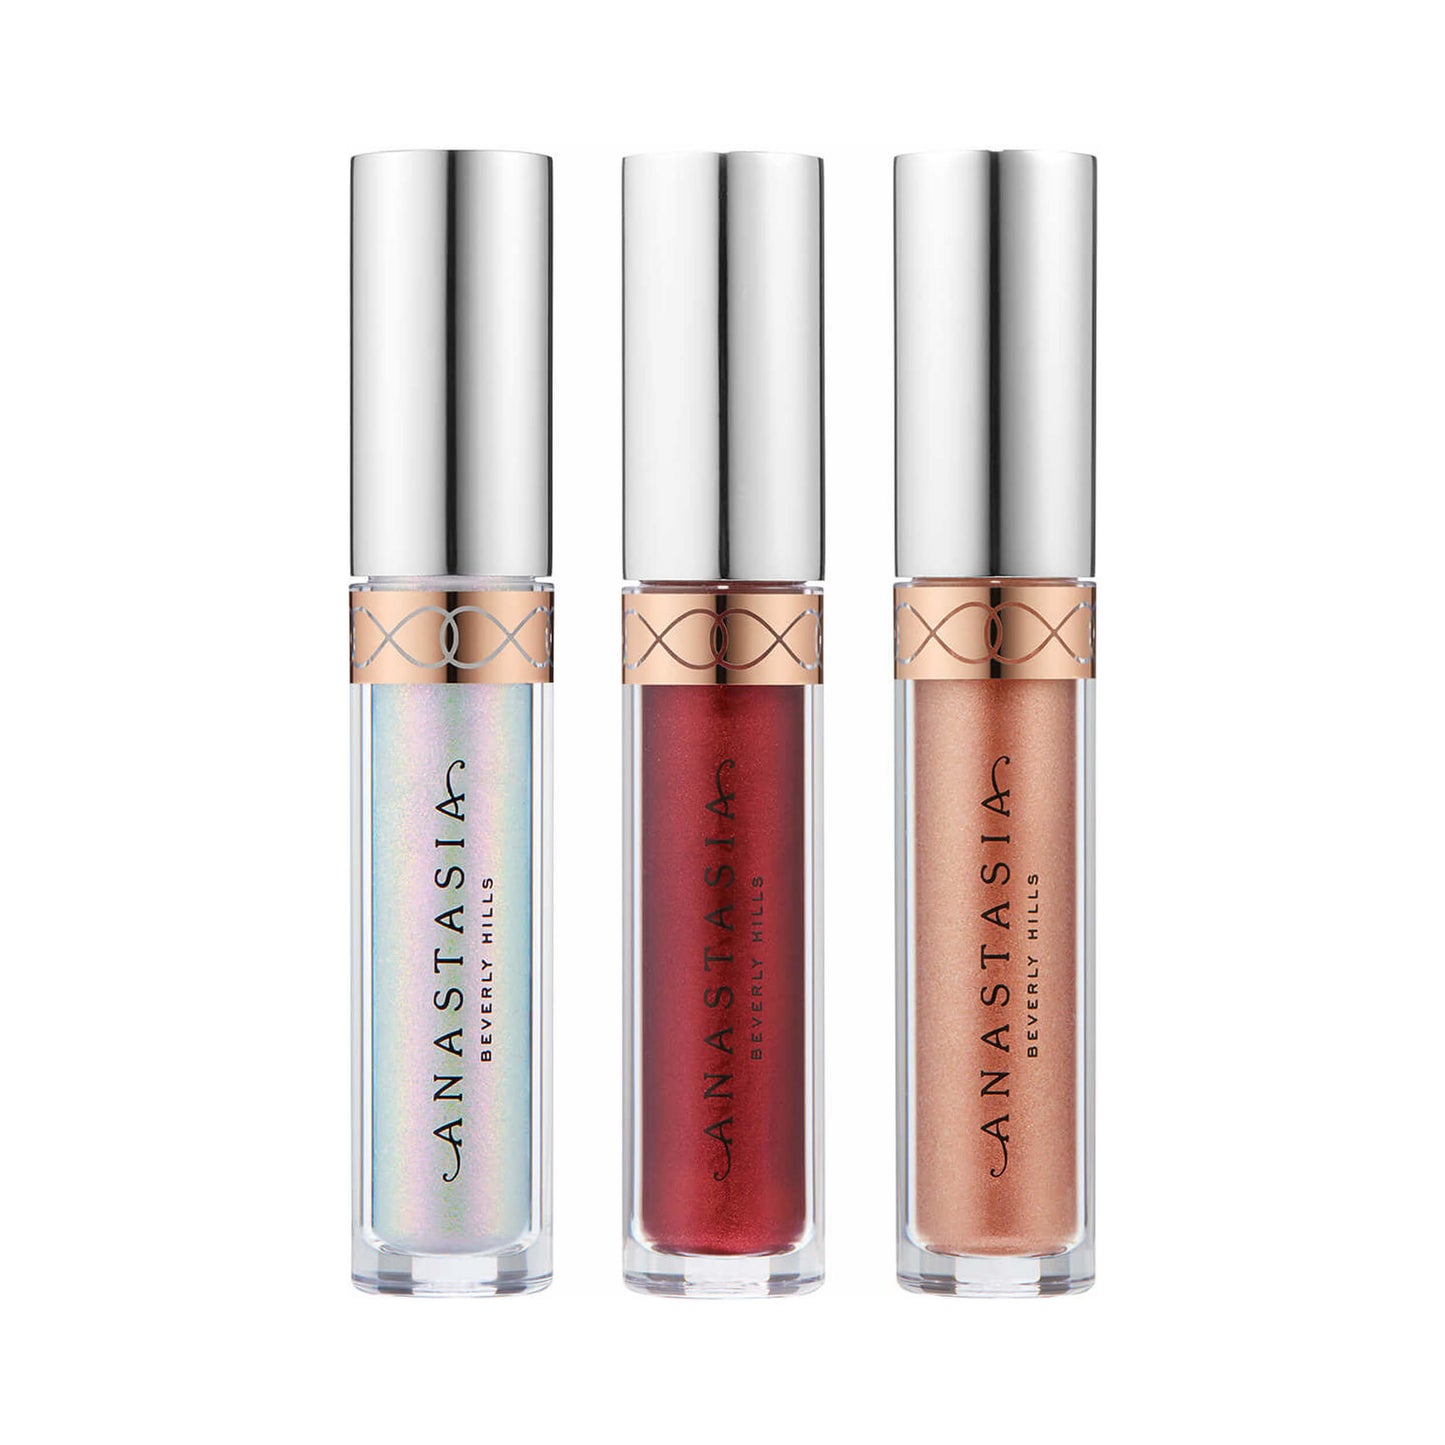 Anastasia Beverly Hills Mini Metallic Liquid Lipstick 3-Piece Set